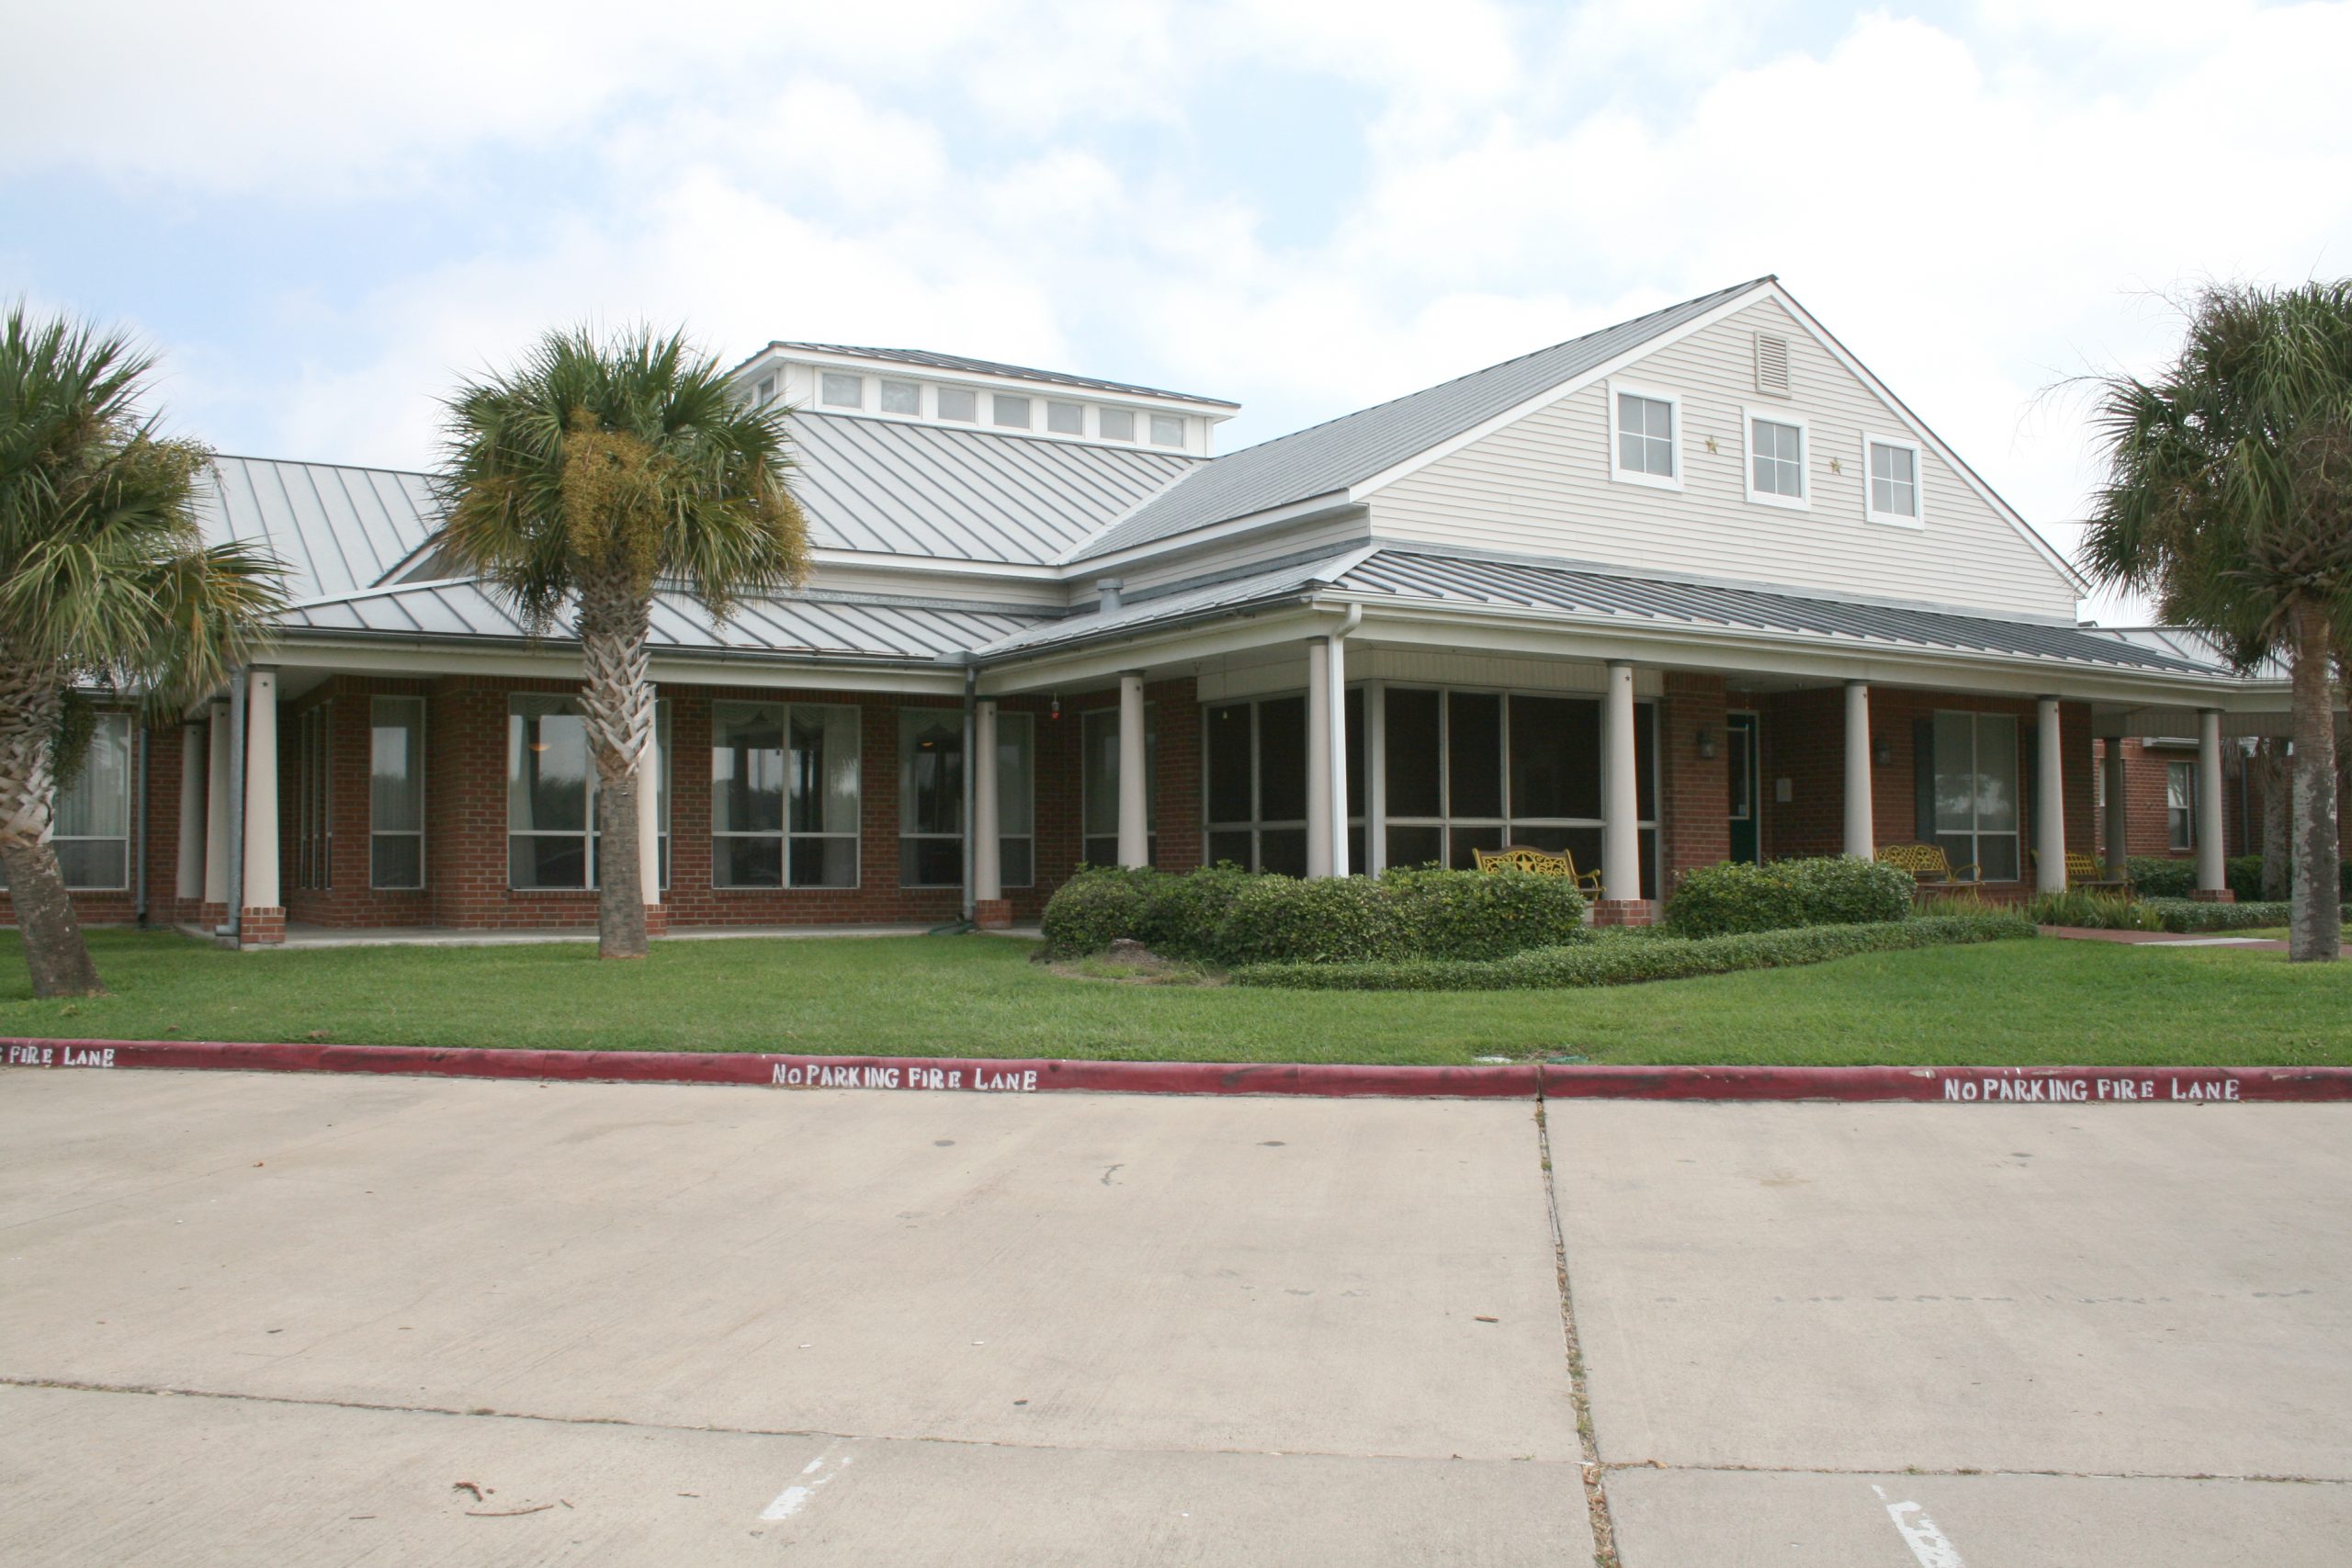 Villa Residential of Corpus Christi South Inc